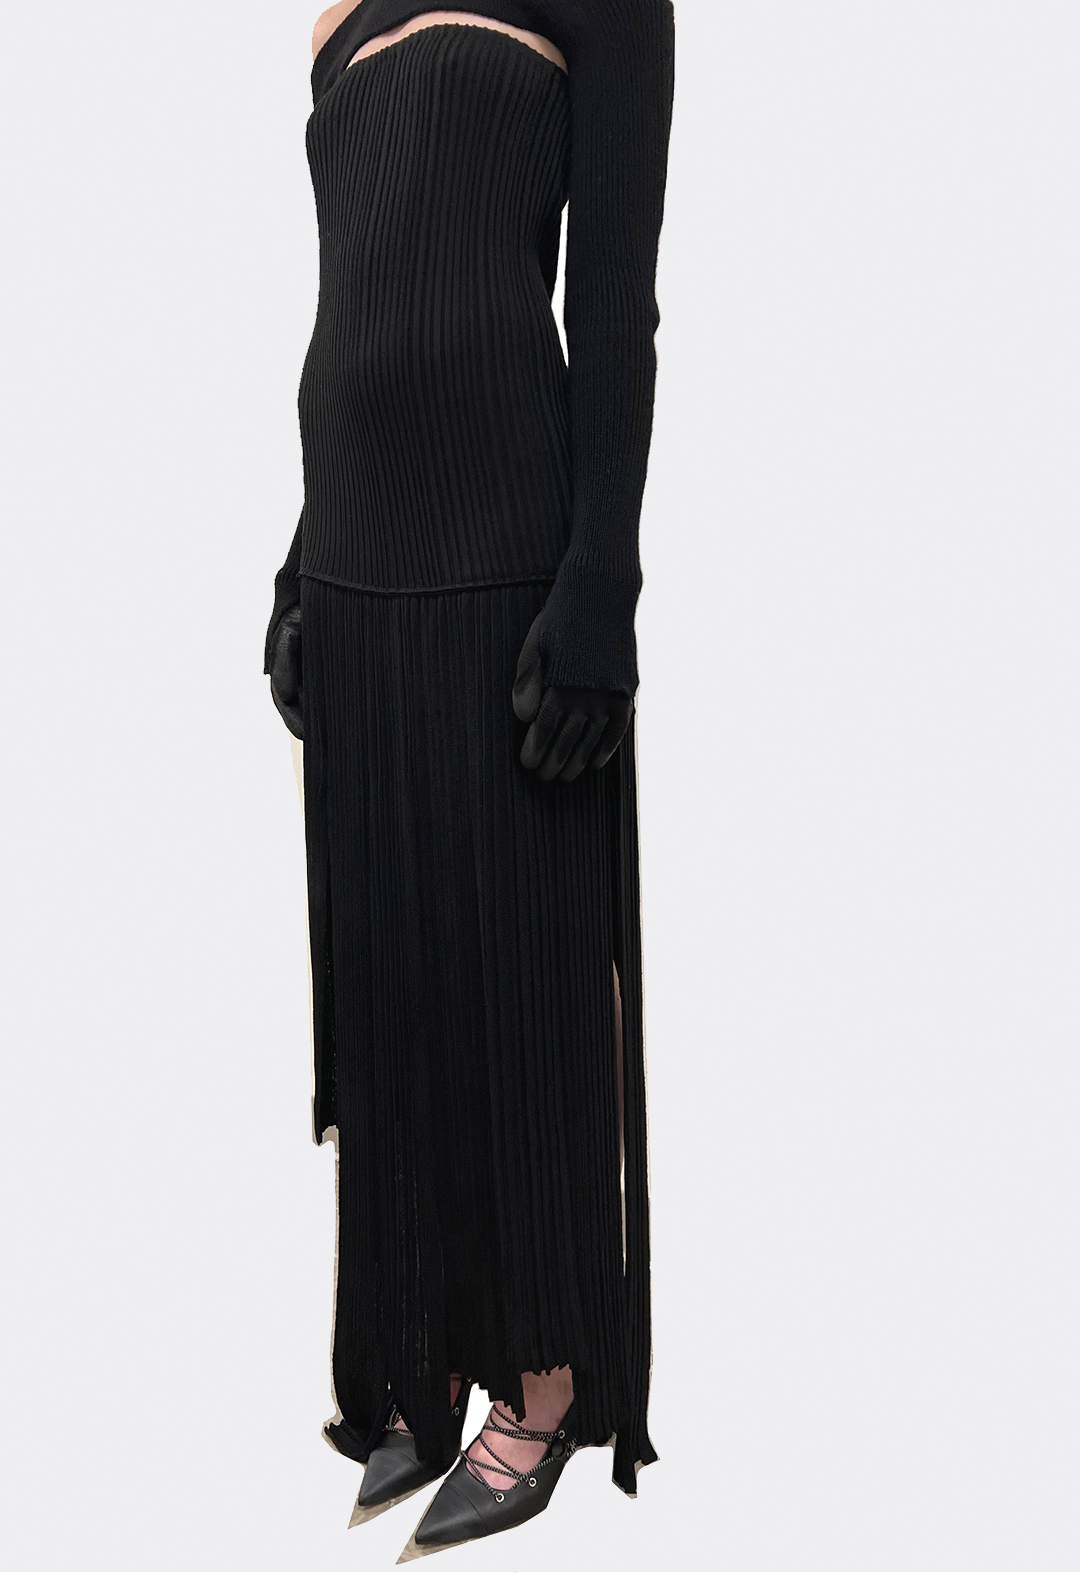 Three-quarter view of a model wearing a black knit dress.